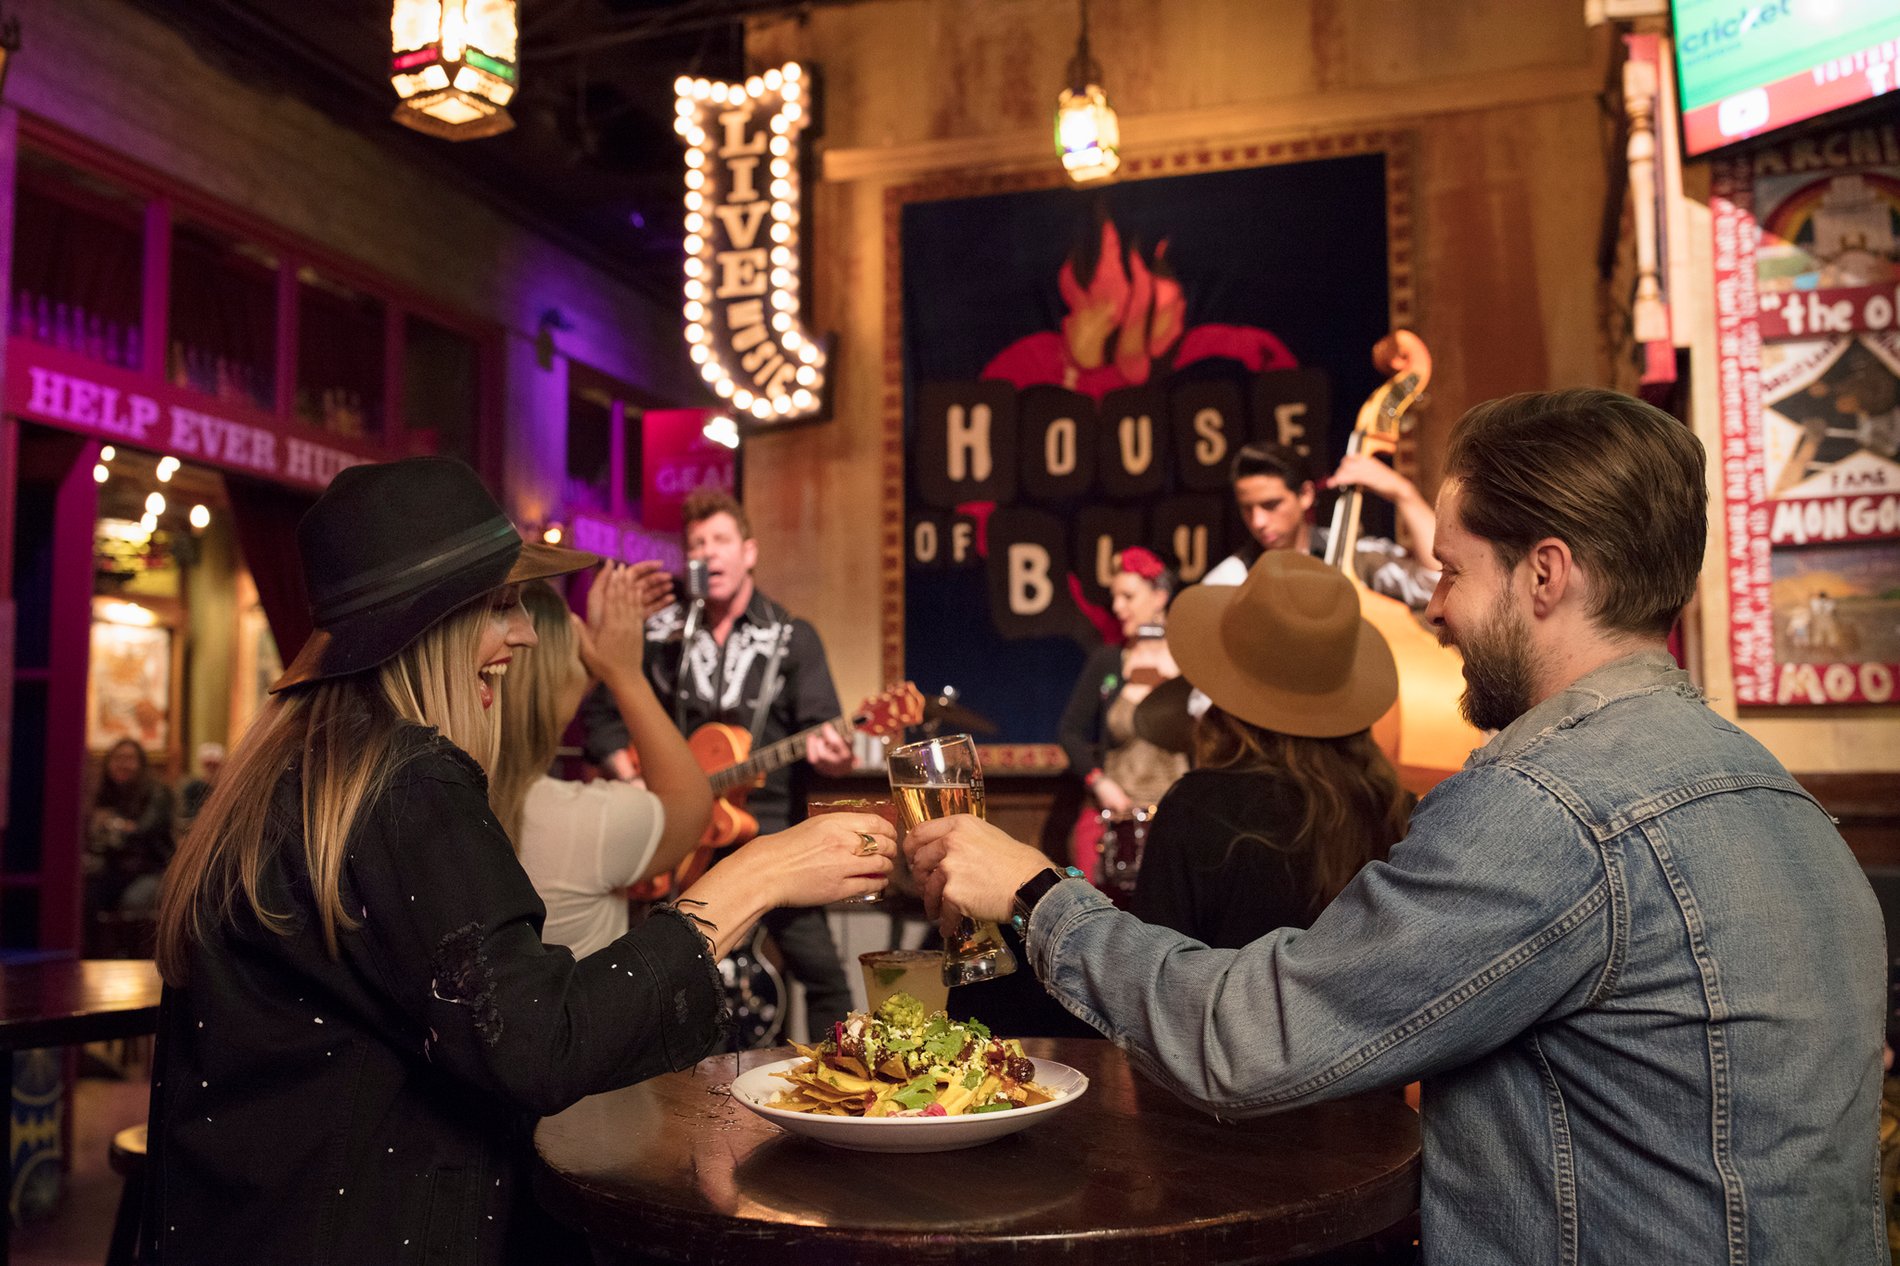 House of Blues Restaurant & Bar Events